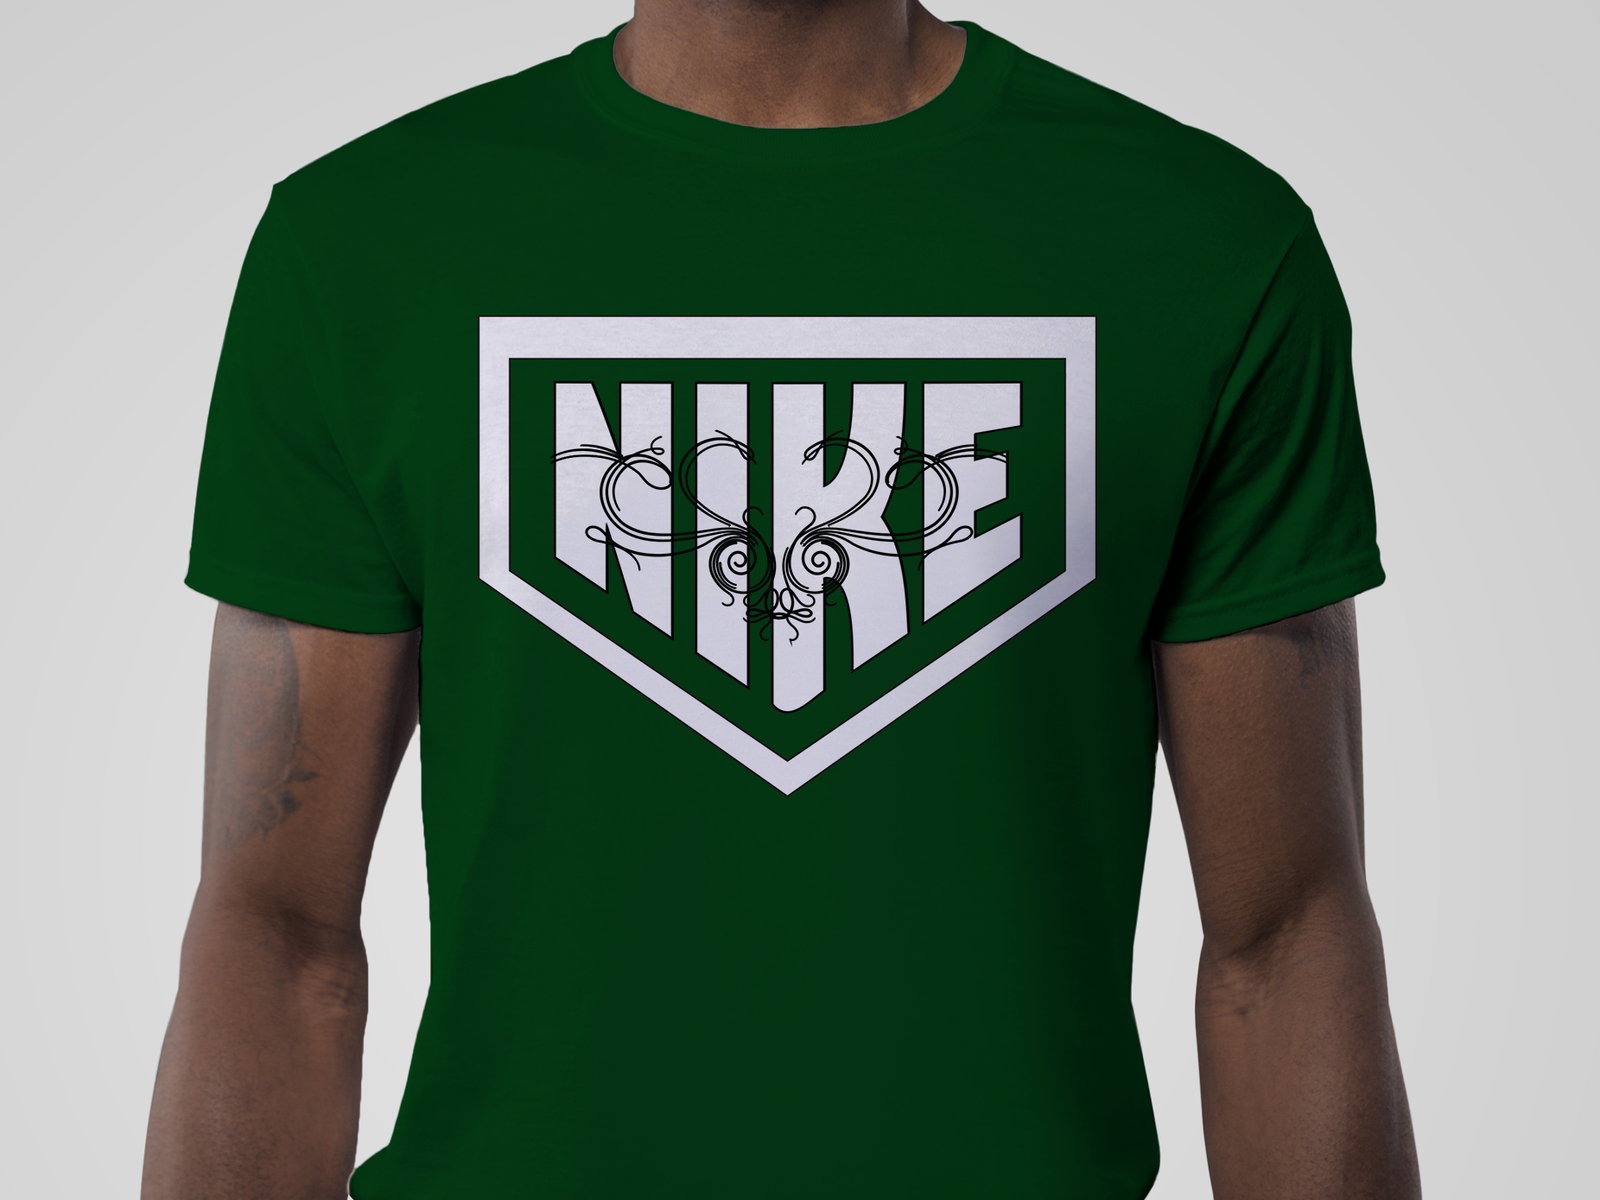 Nike T-Shirt by Limon Hossain on Dribbble